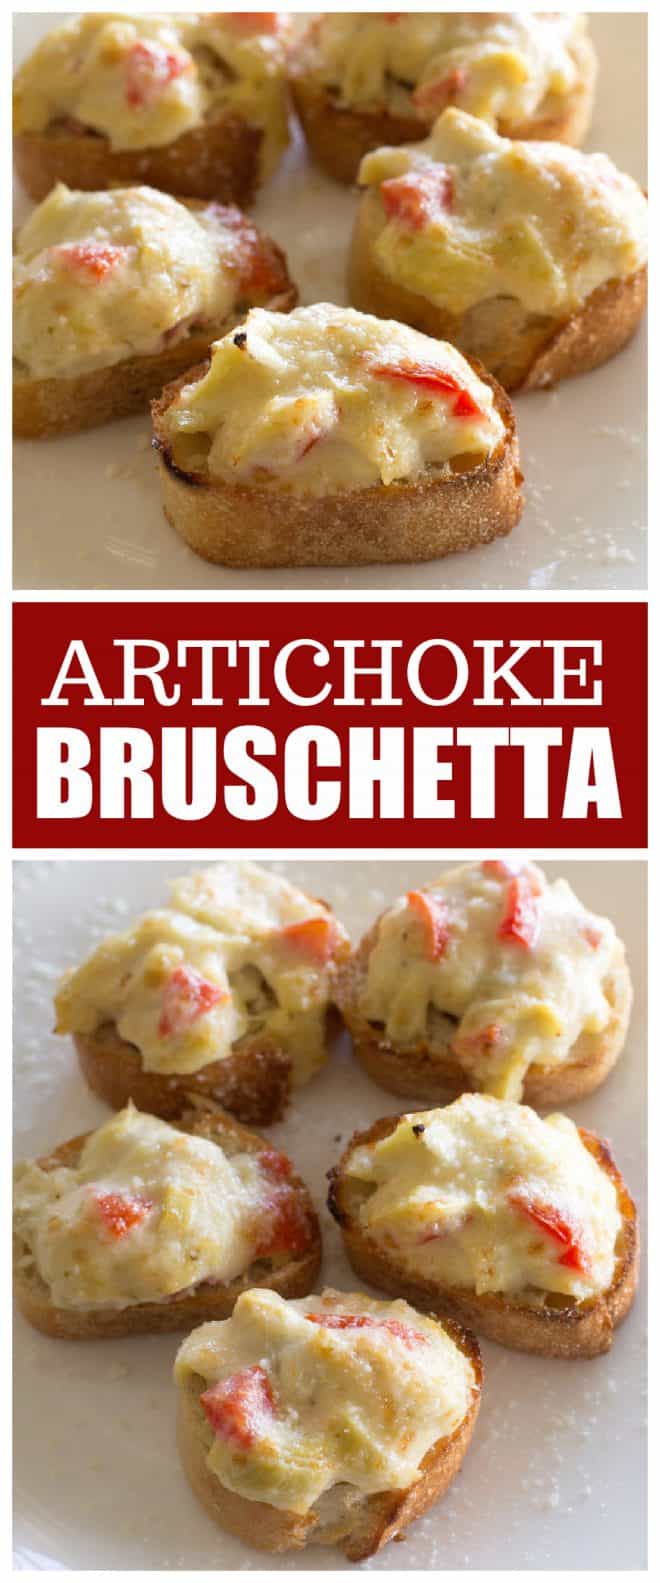 This Artichoke Bruschetta has fresh tomato, onions, artichokes, and cheese piled on top of some crusty baguette slices. #appetizer #recipe #artichoke #bruschetta